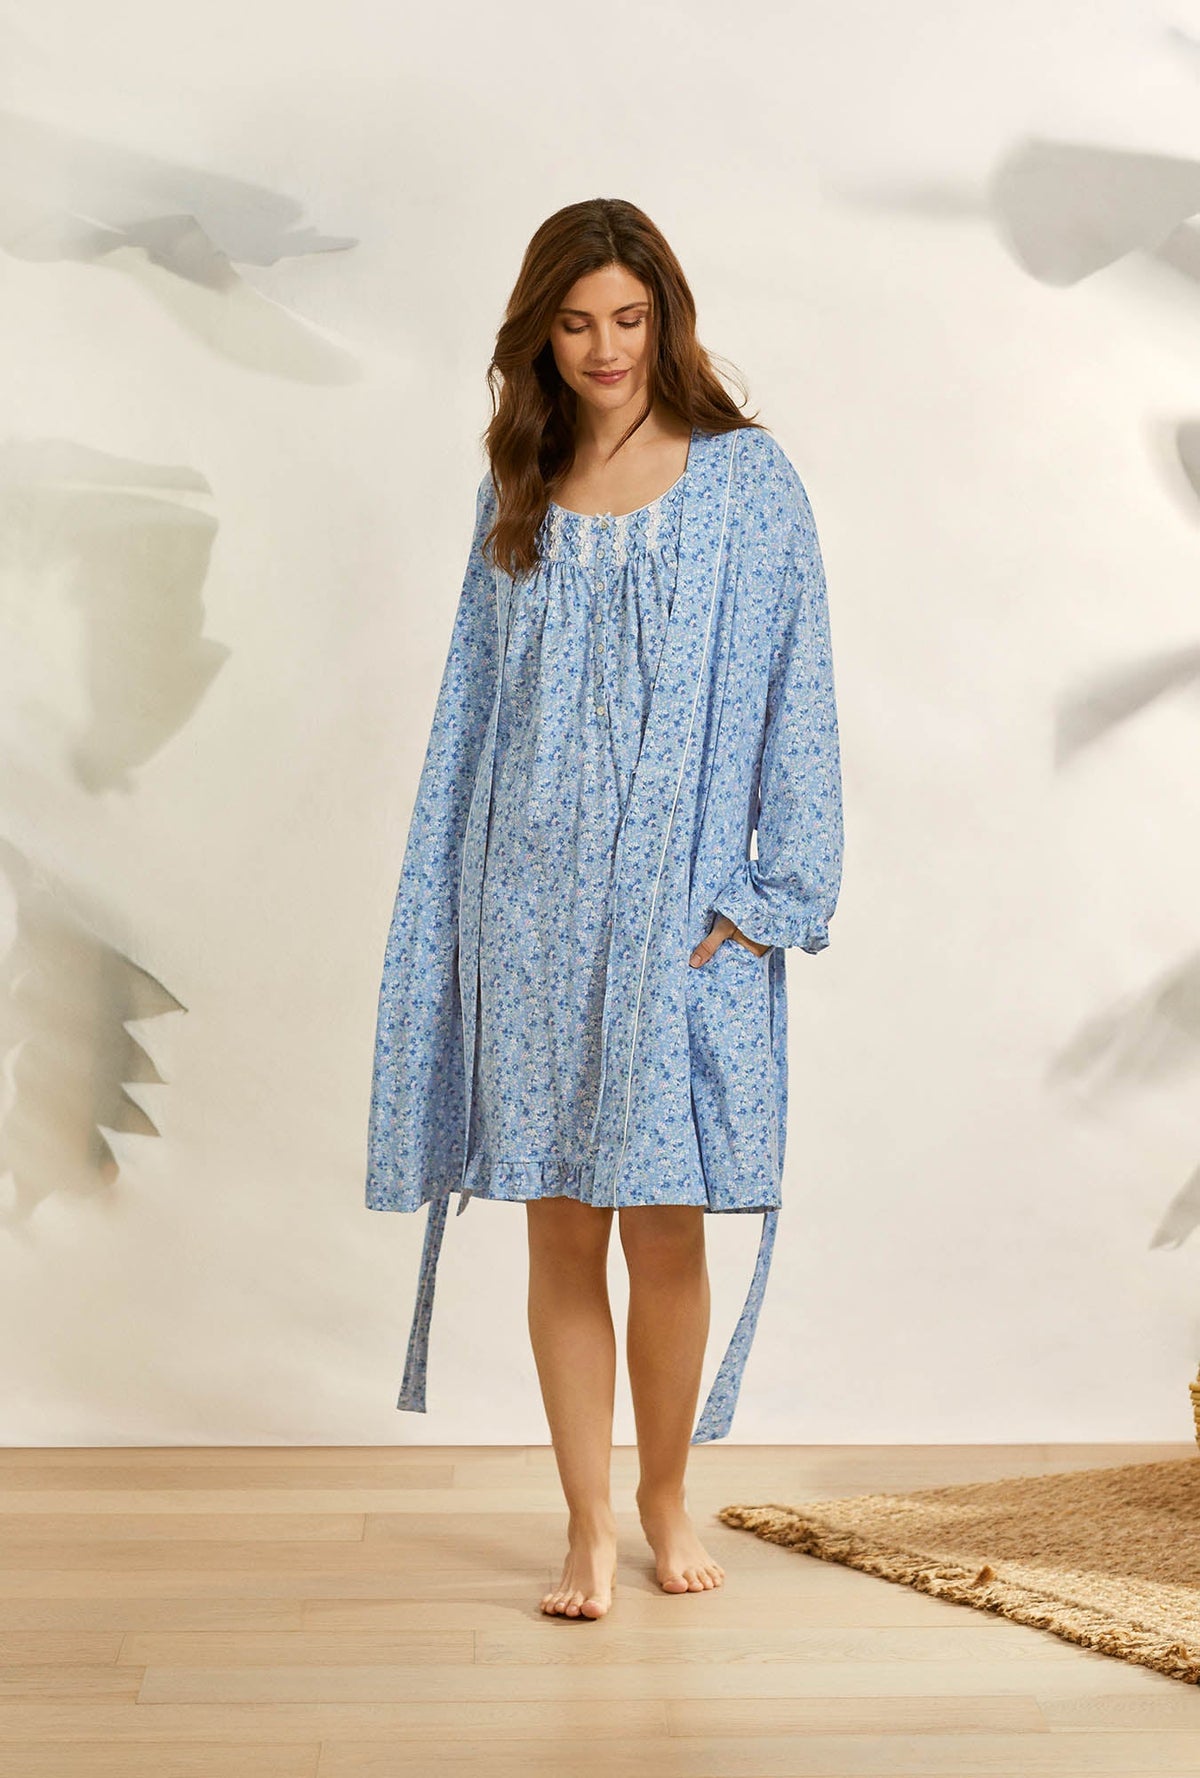 A Lady wearing sleeveless  Blue Garden Short Knit Cotton Nightgown